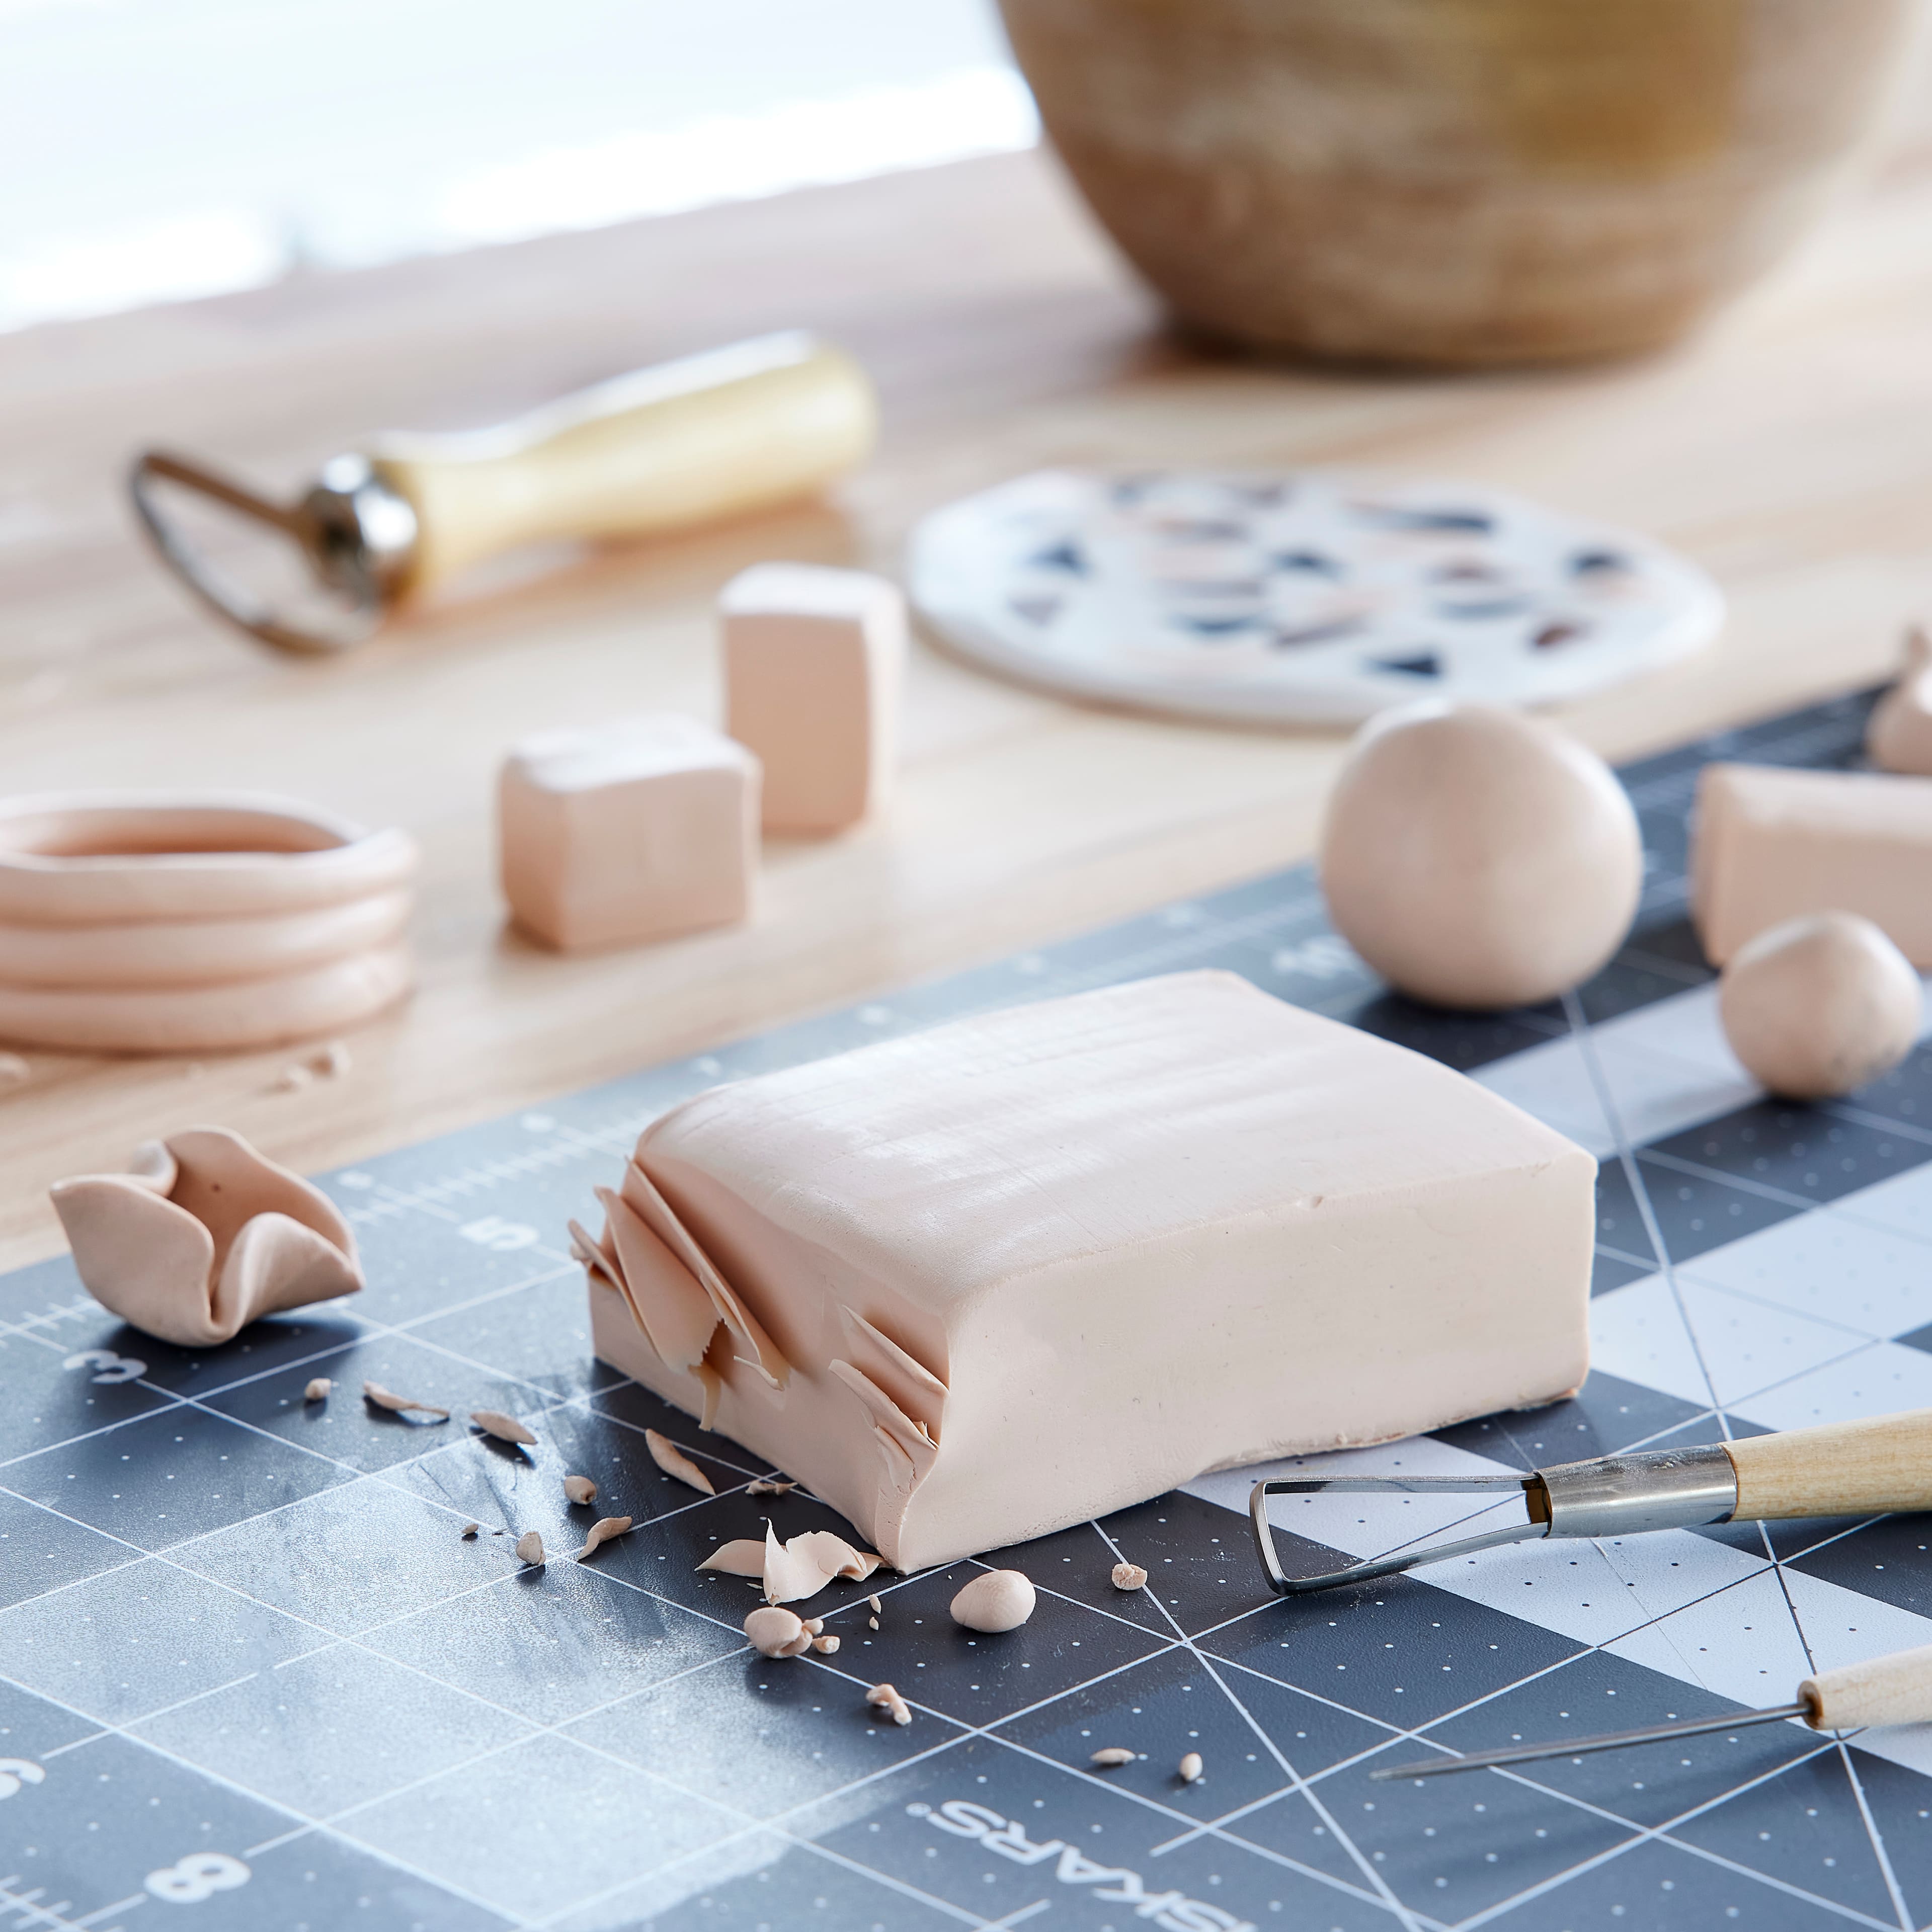 Craft Smart Modeling Clay Set - 6.1 lb